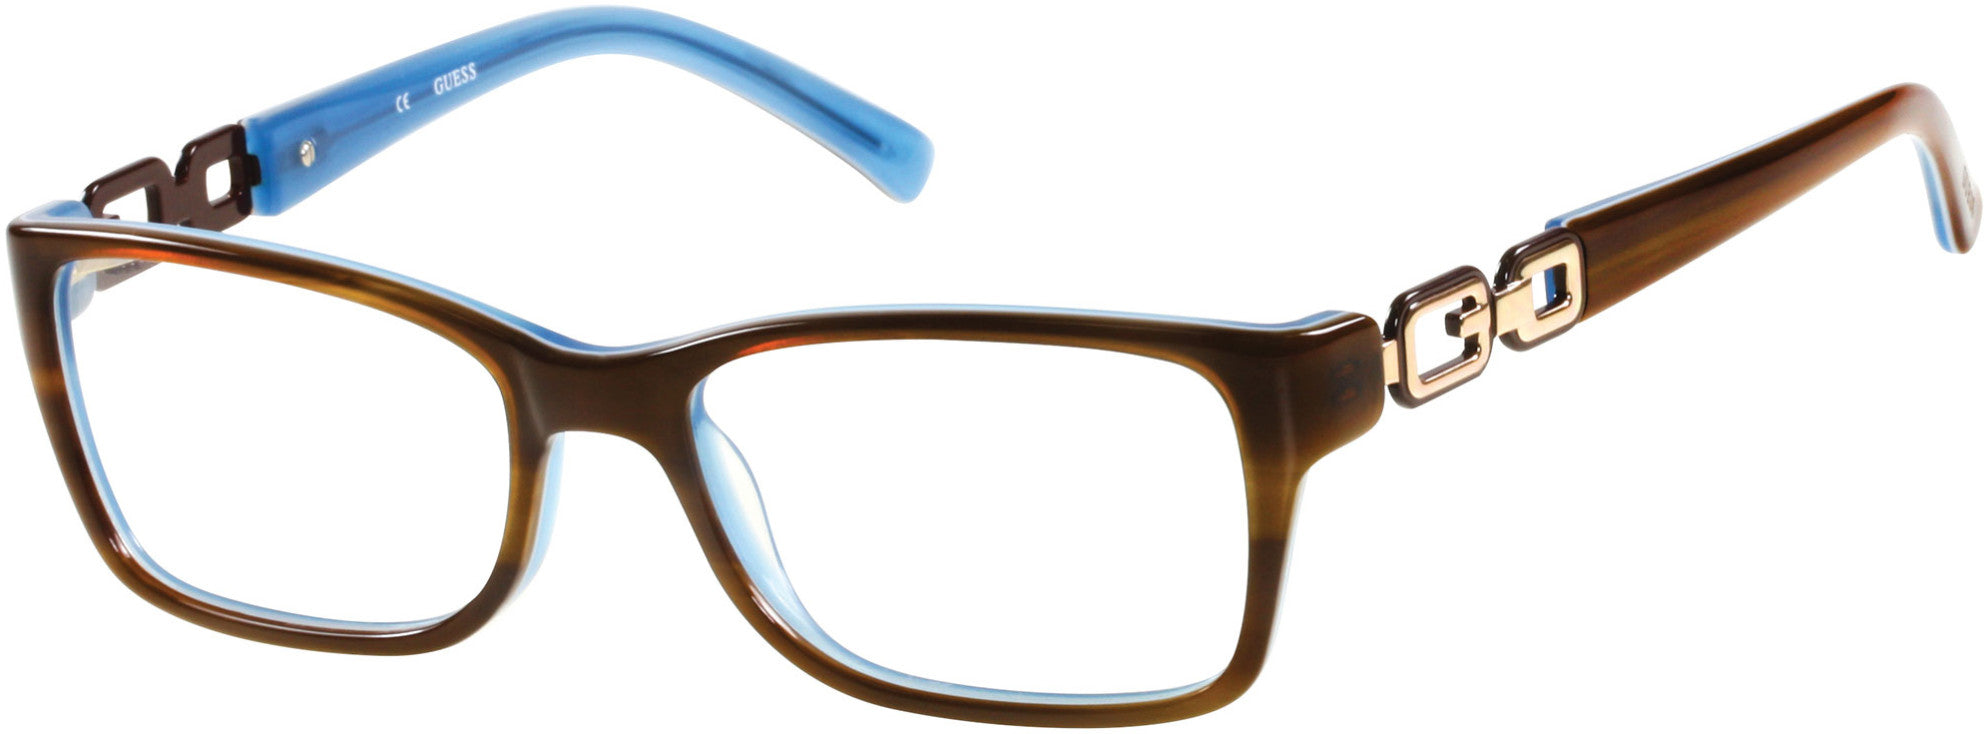 Guess GU2406 Eyeglasses E50-E50 - Brown / Blue